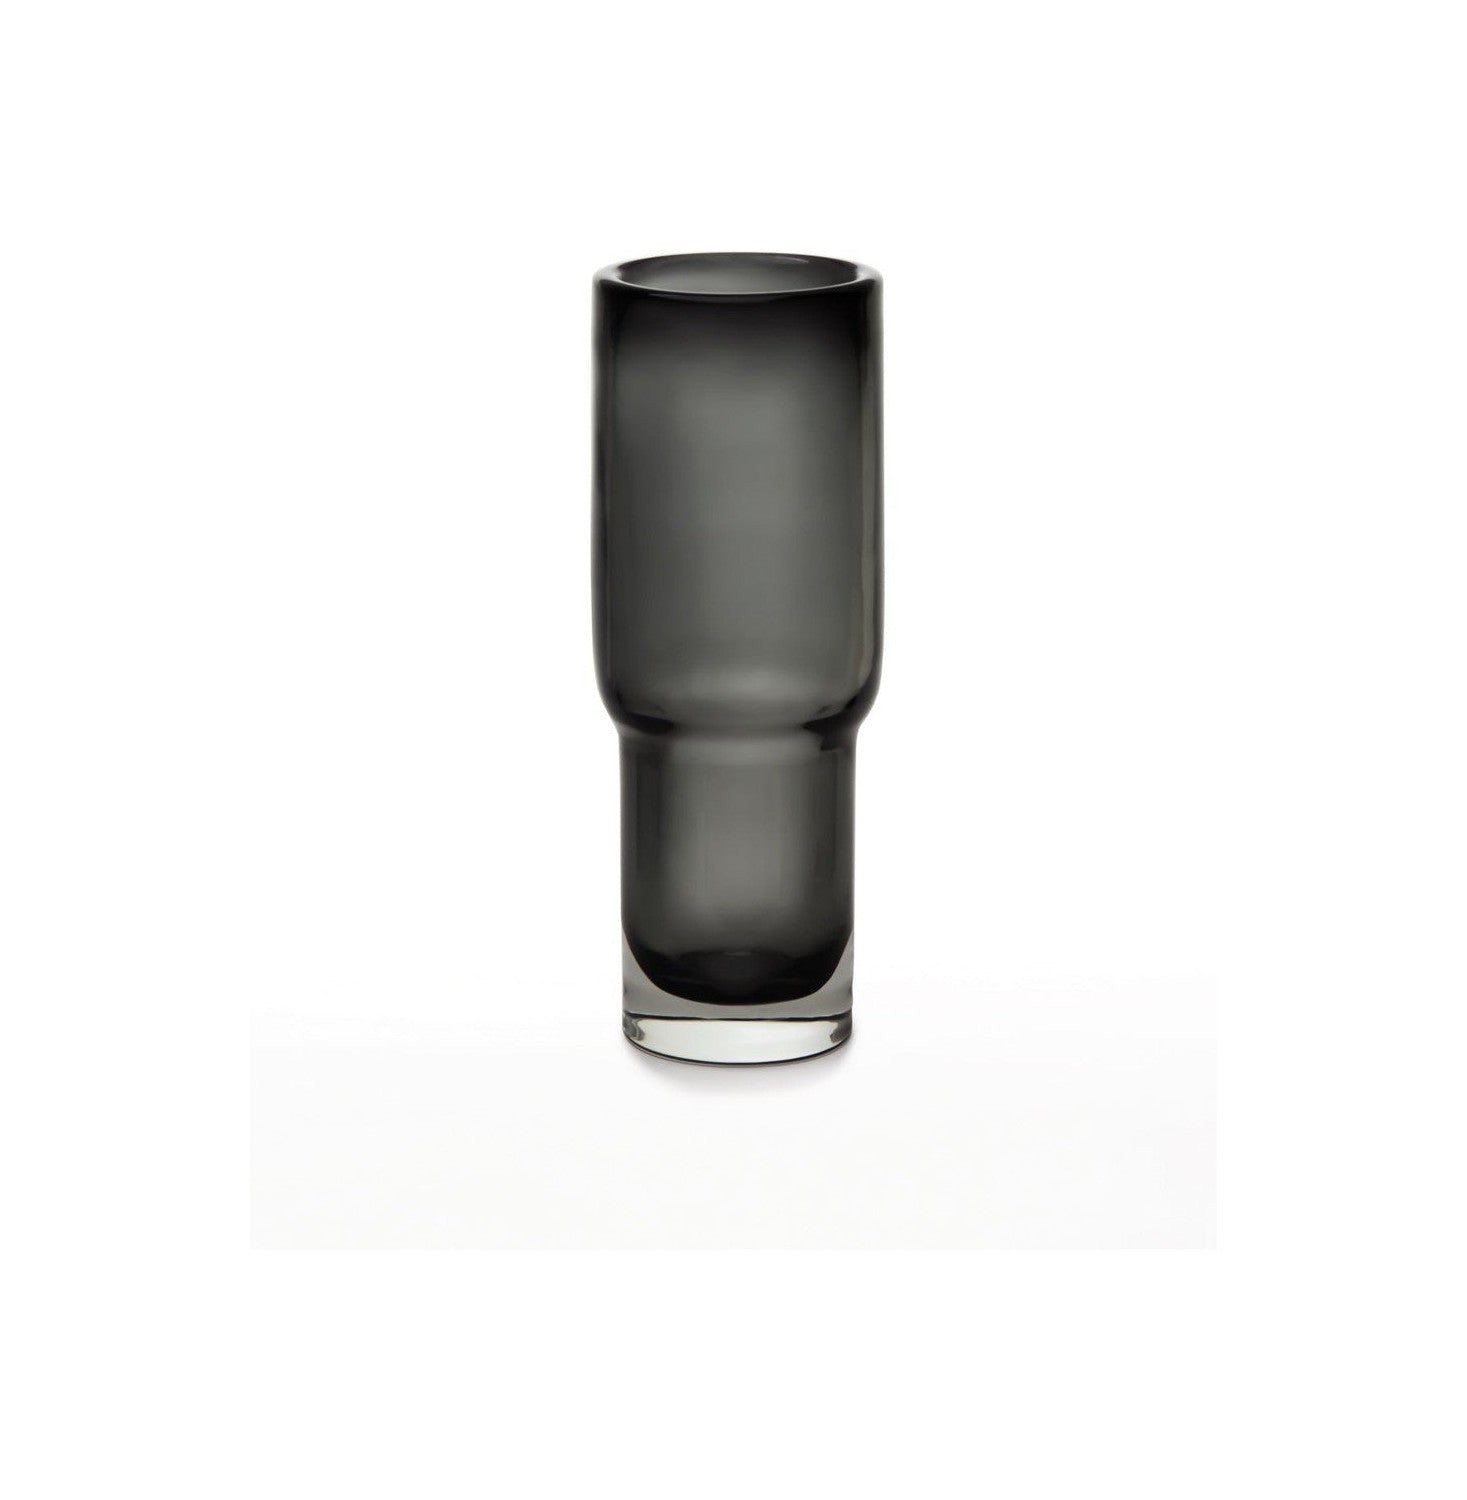 slim long vase, modern classic style, UDINE 32GR luxury glass 9mm